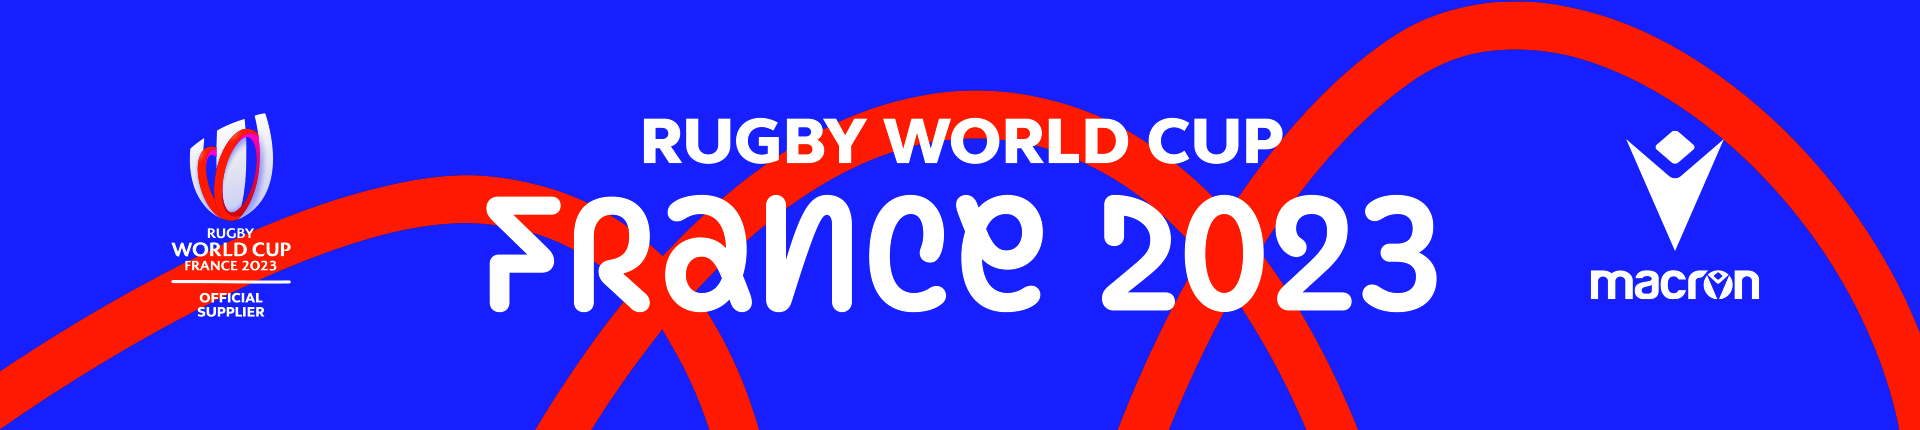 RWC Rugby World Cup France 2023